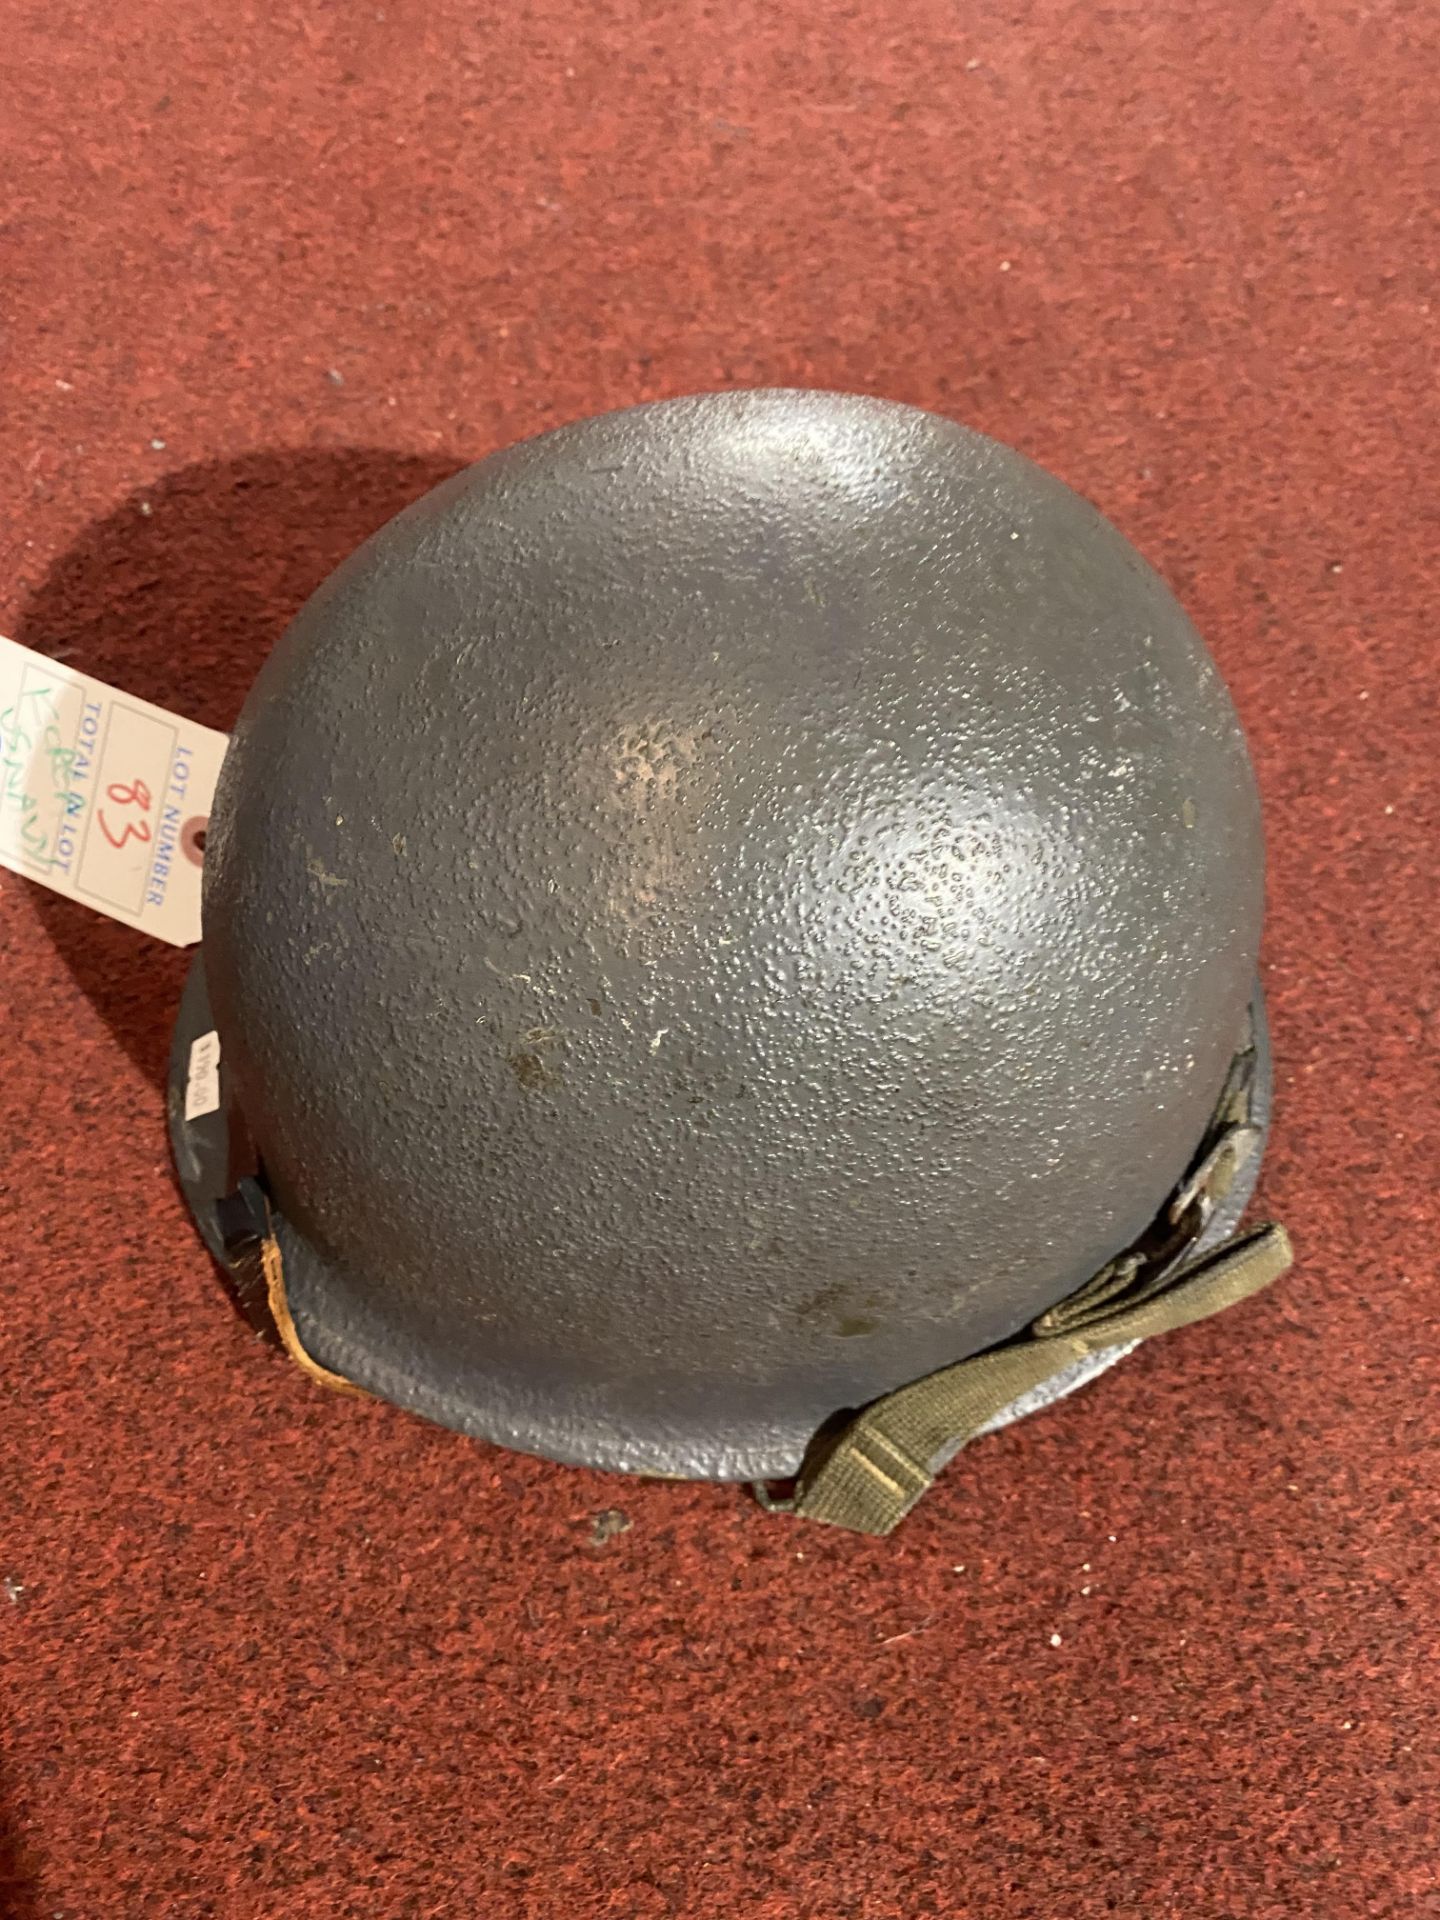 Korean Era US Navy Helmet - Image 2 of 5